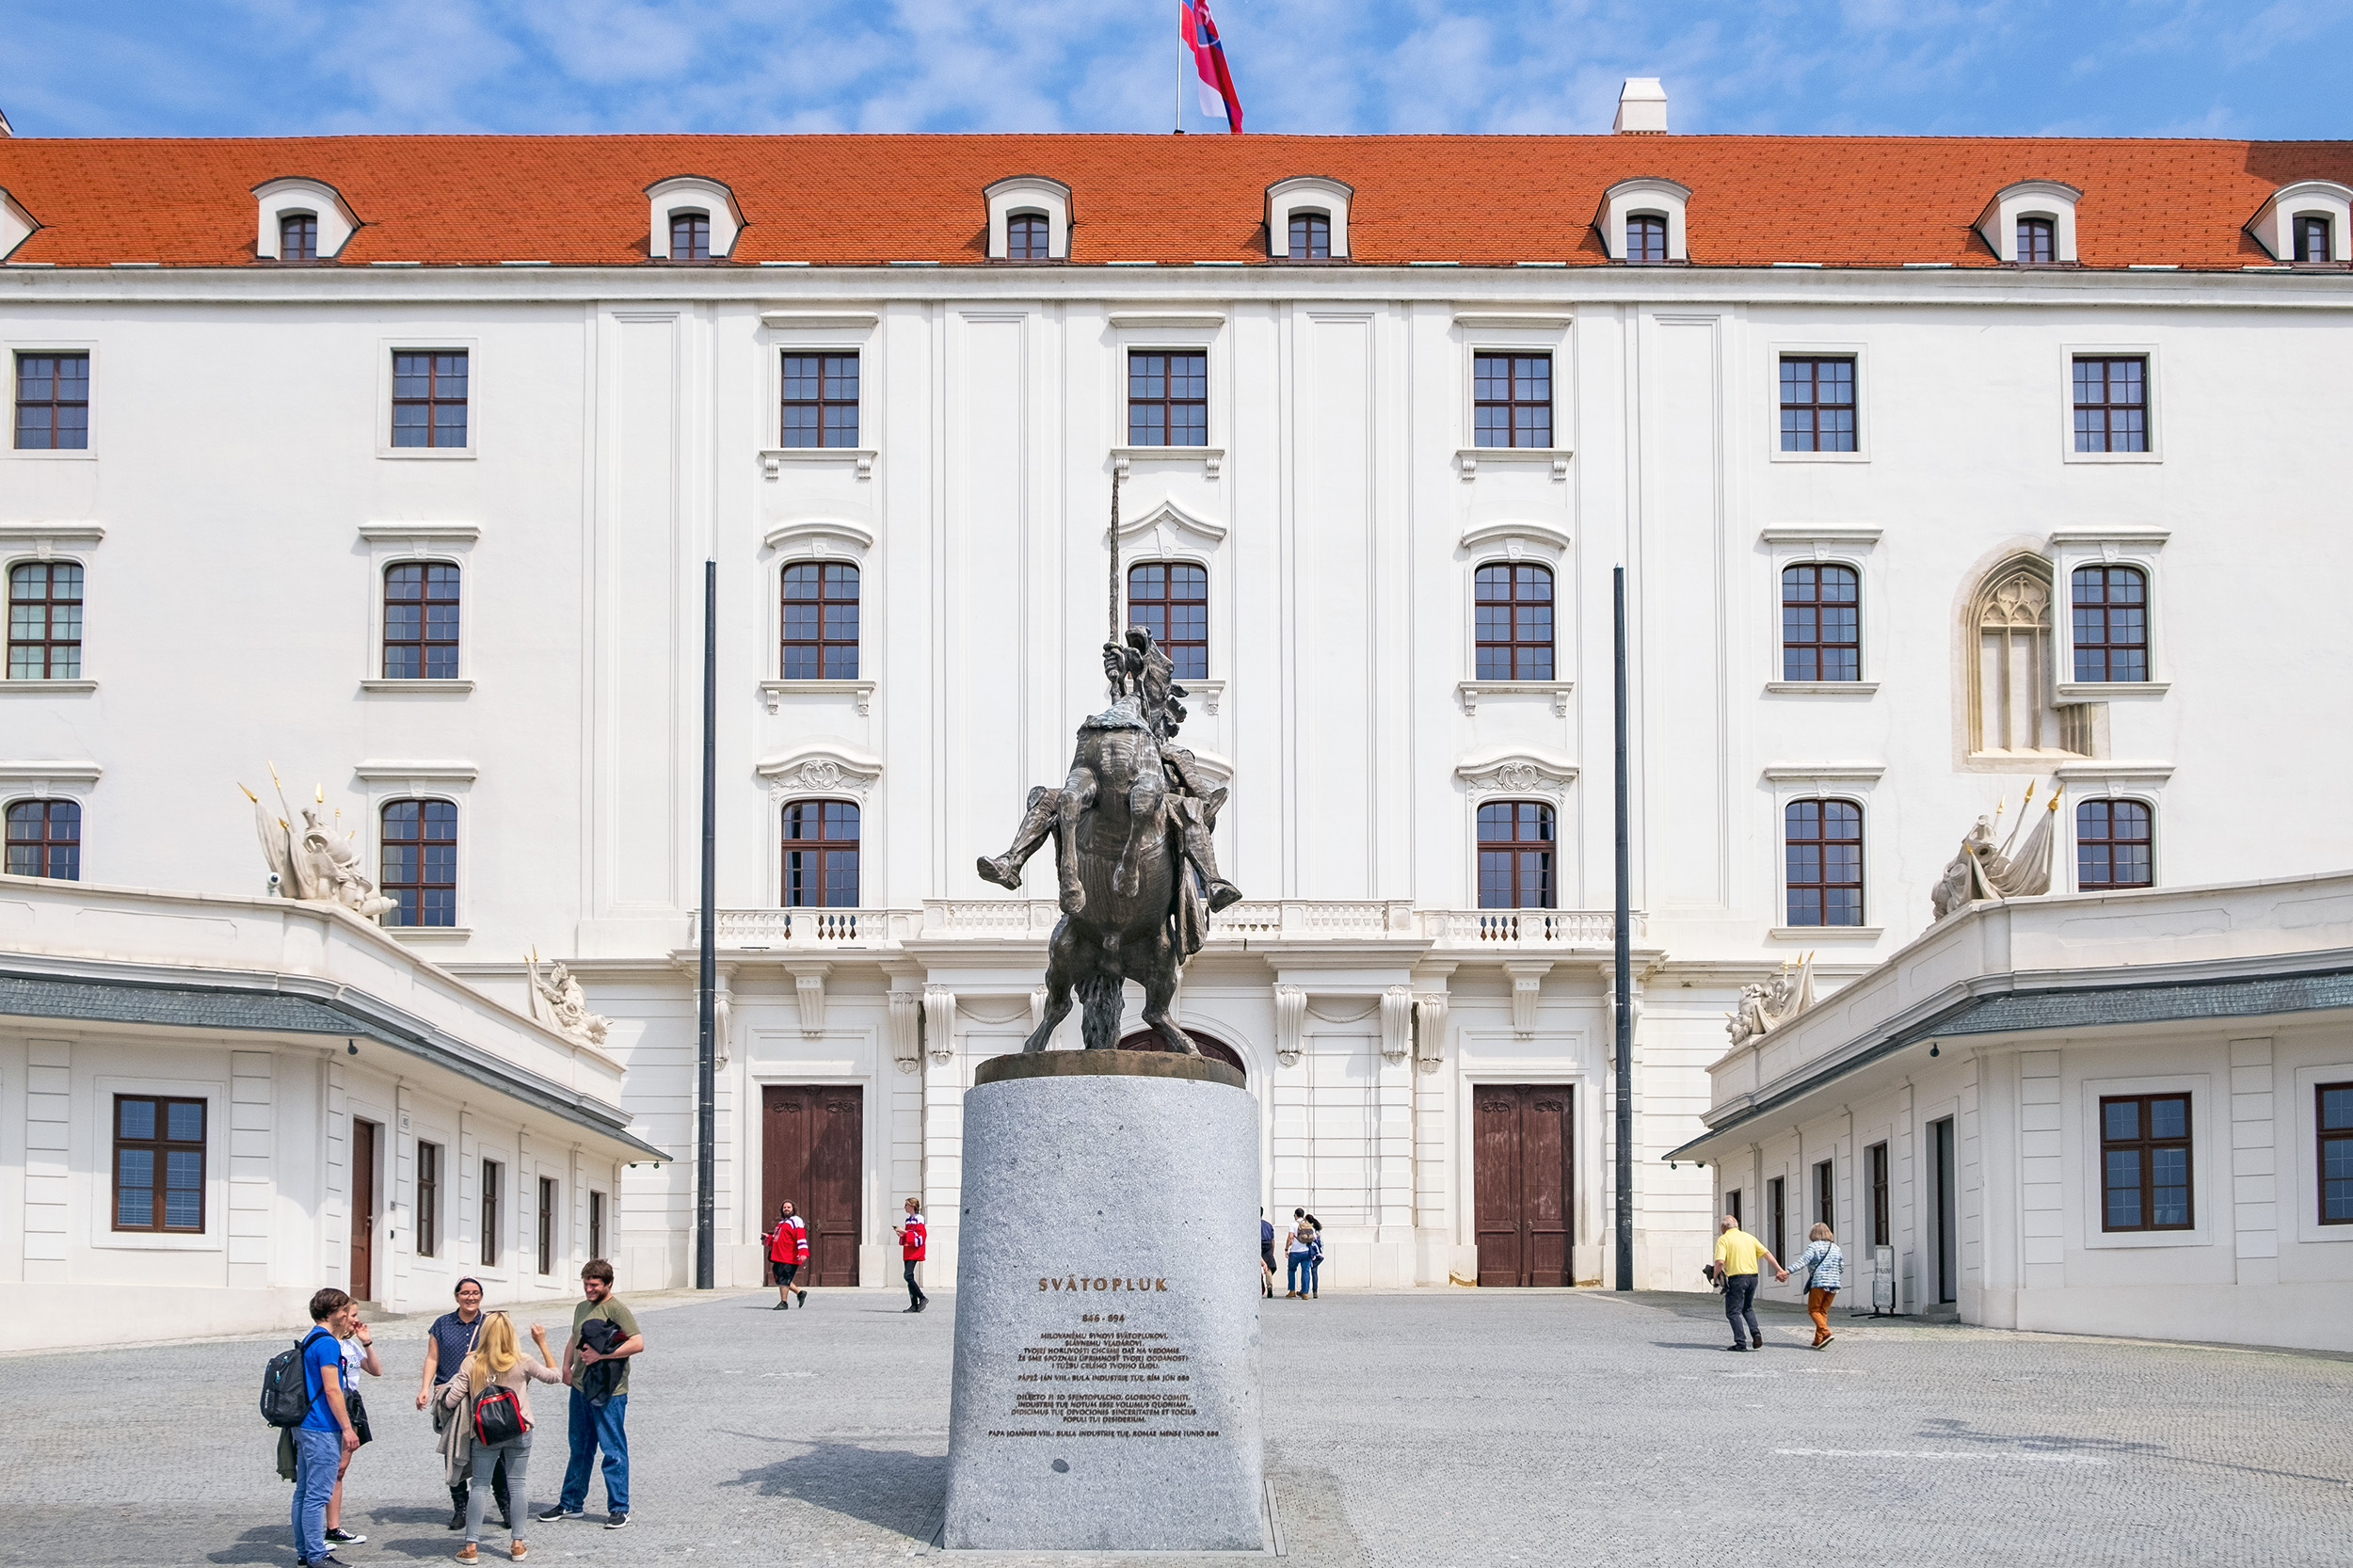  King Svätopluk Slottet i Bratislava